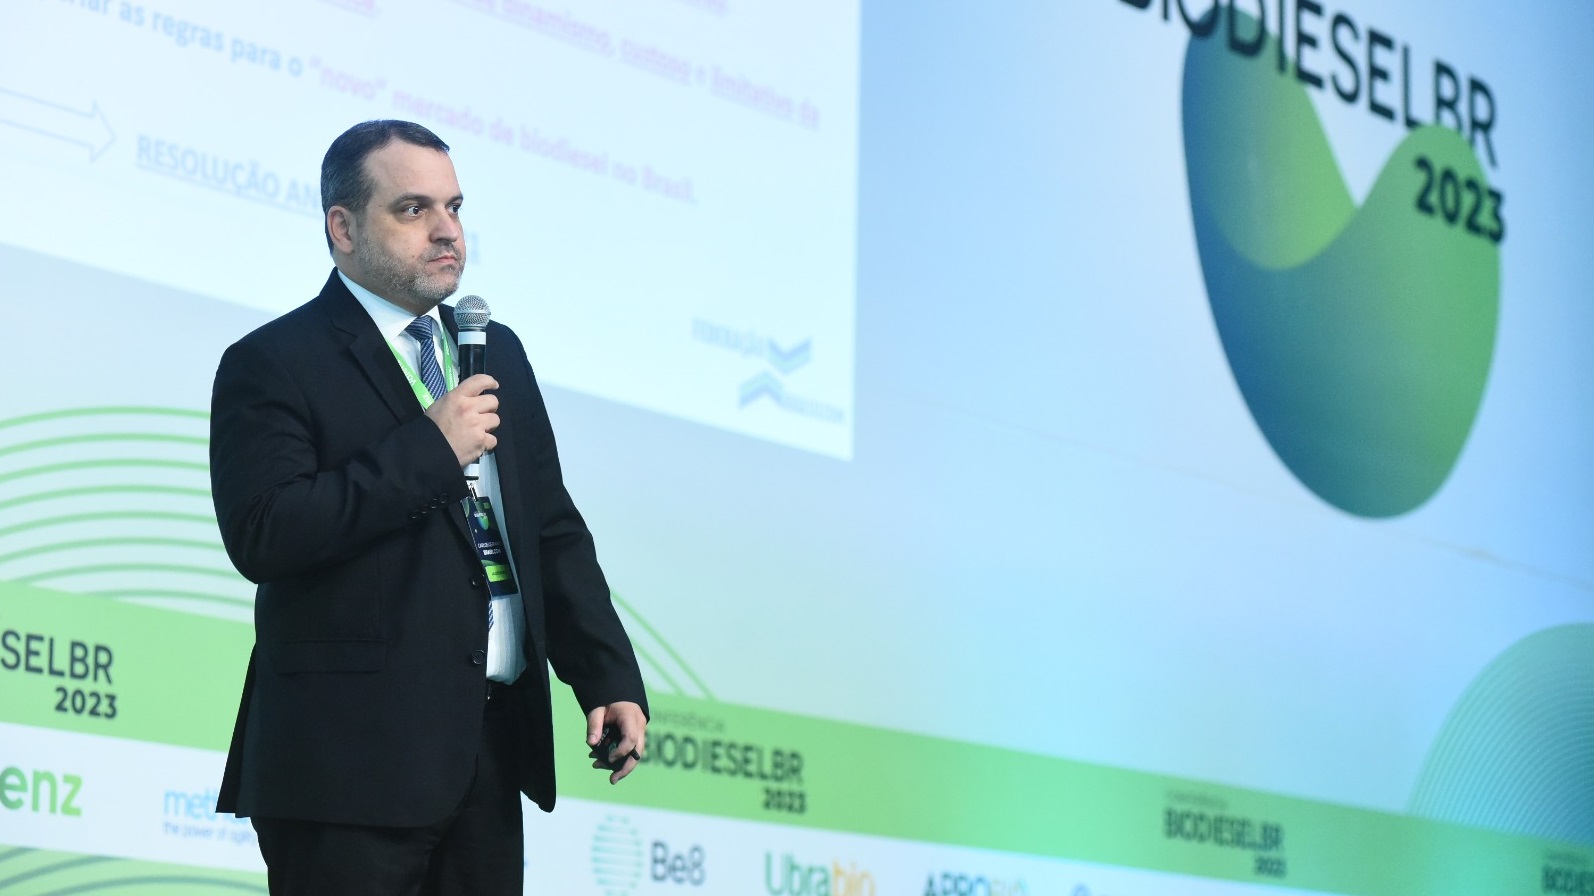 BRASILCOM defende a monofasia tributária durante a Conferência BiodieselBR 2023